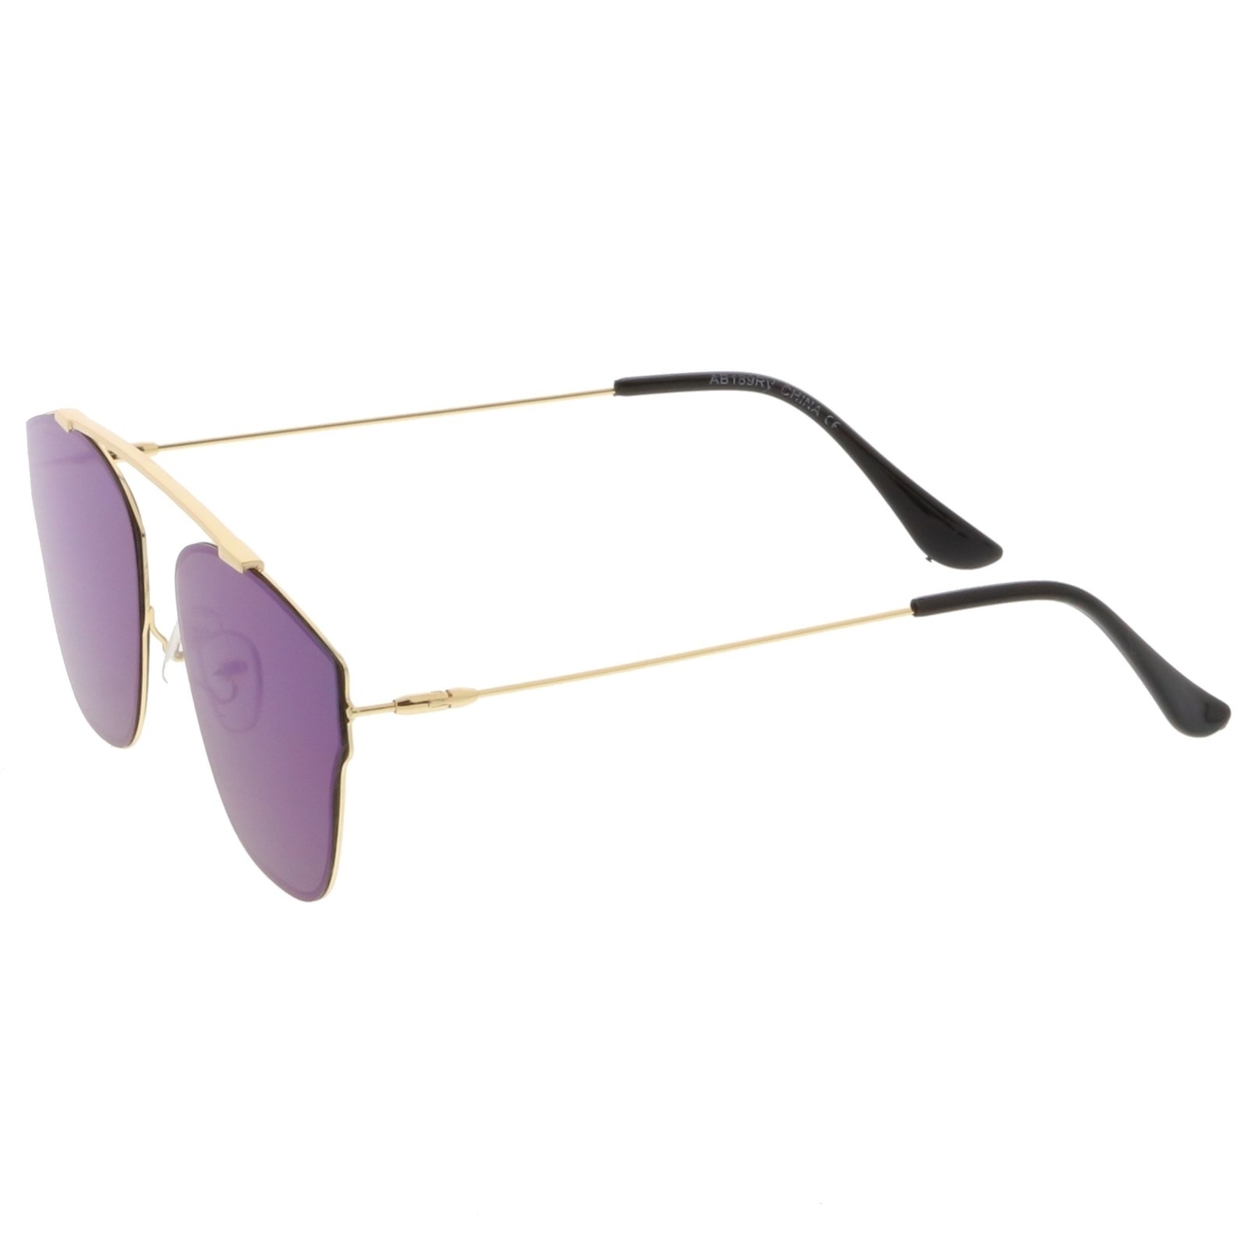 Modern Ultra Slim Metal Curved Crossbar Colored Mirror Flat Lens Pantos Sunglasses 57mm - Black / Orange Mirror